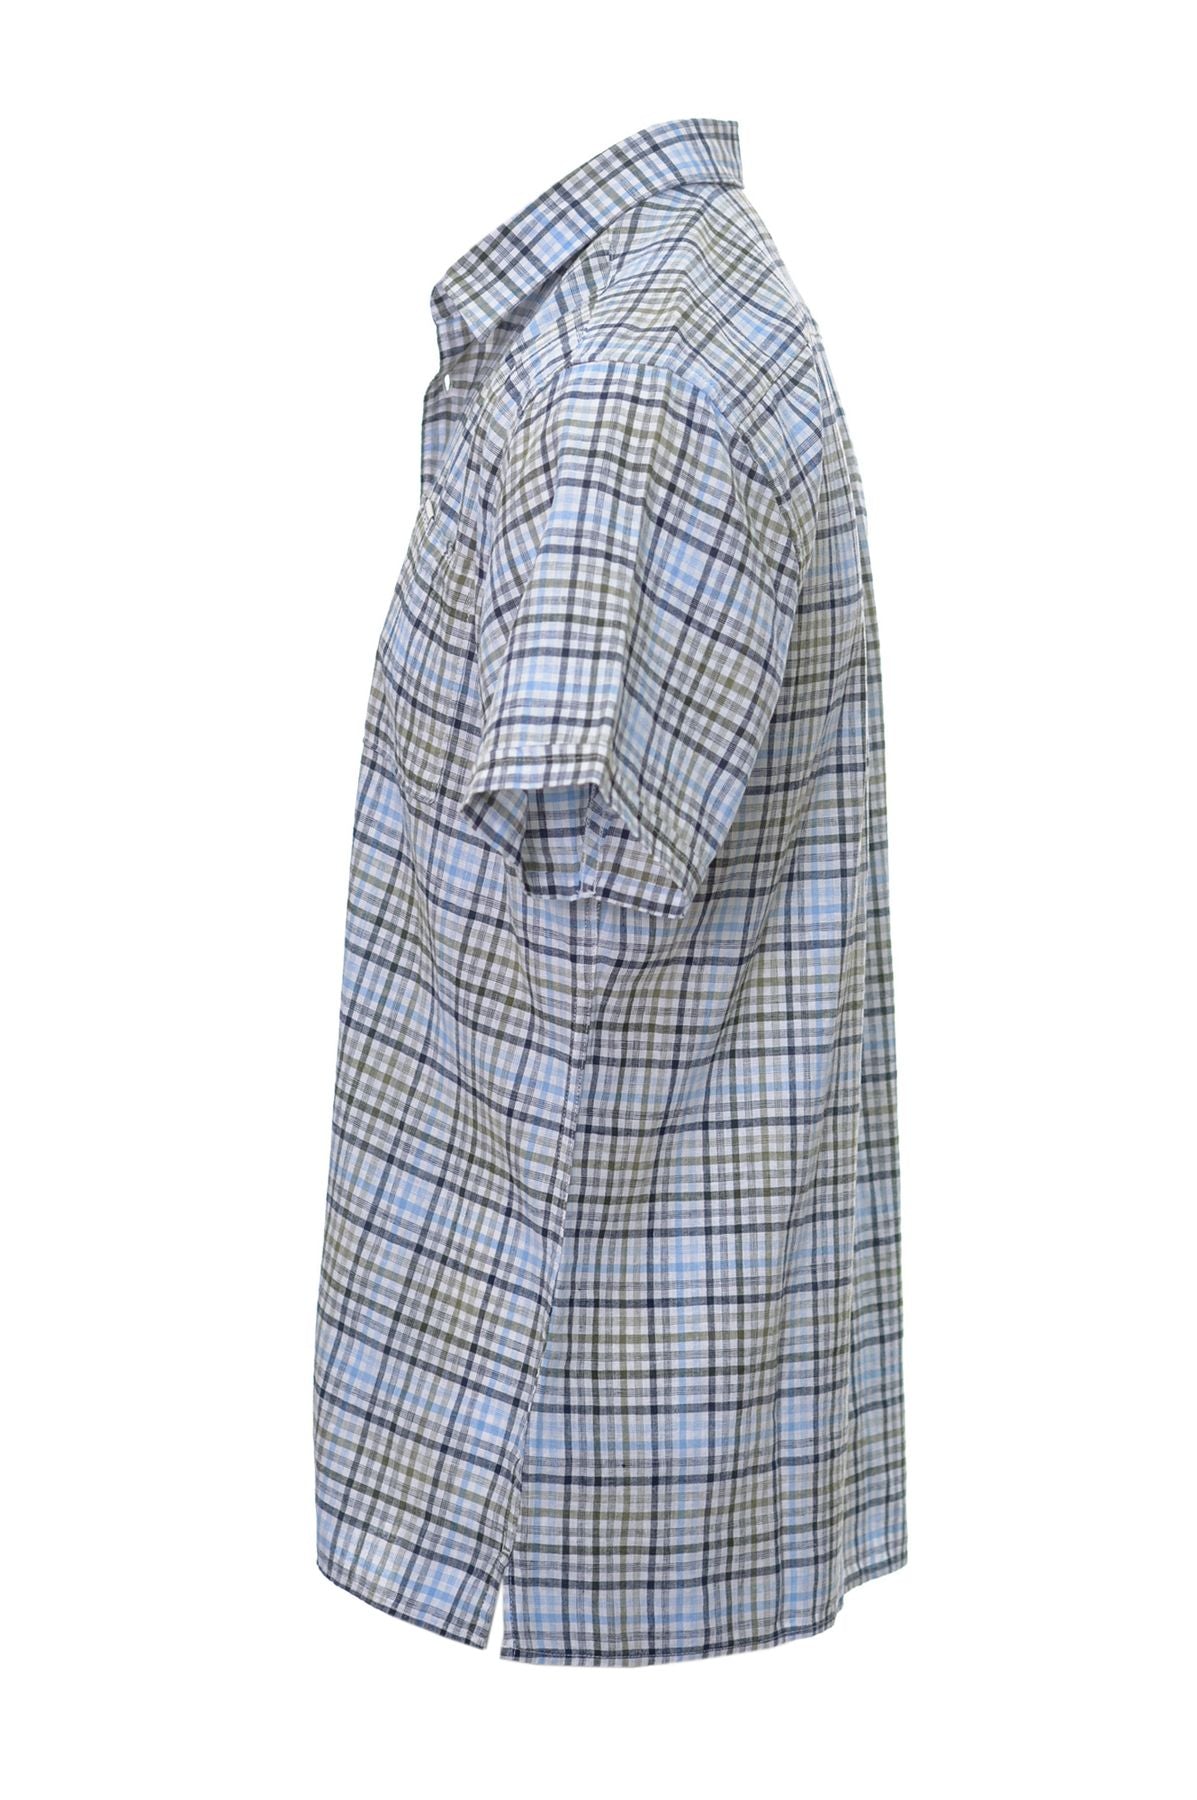 BARBOUR Spring/Summer Linen Shirts